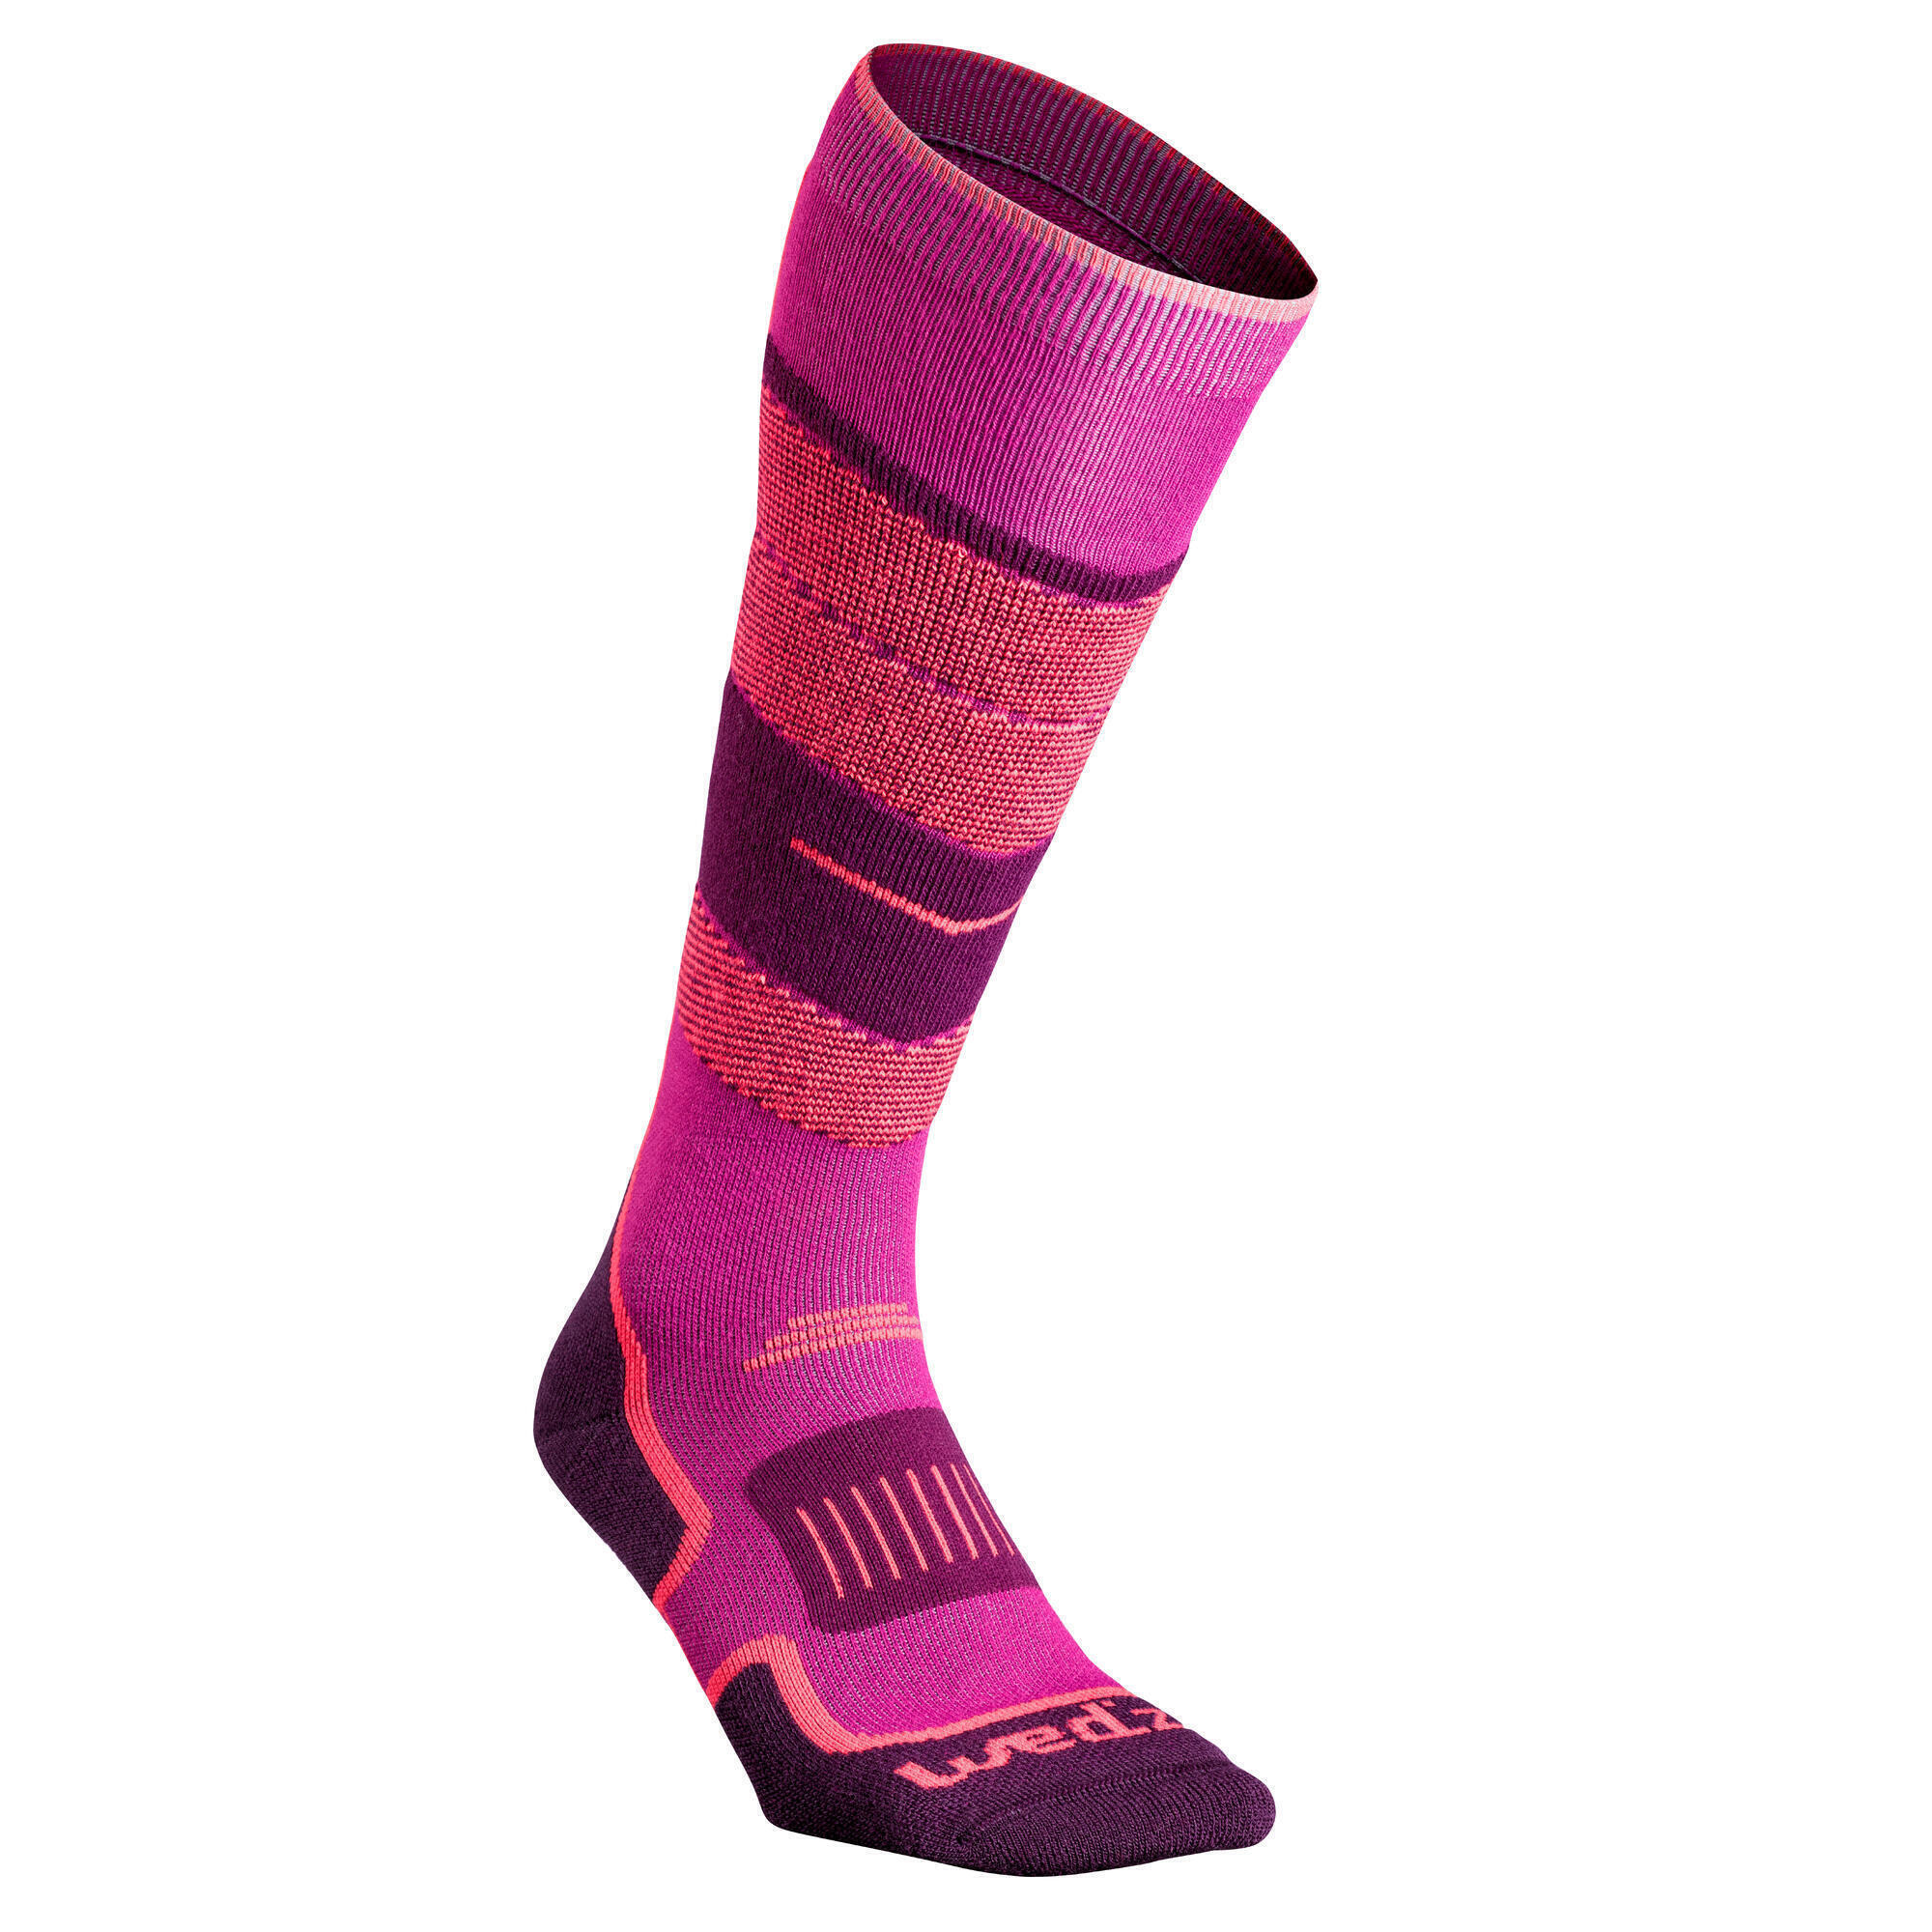 300 Adult Ski Socks - Pink 1/5